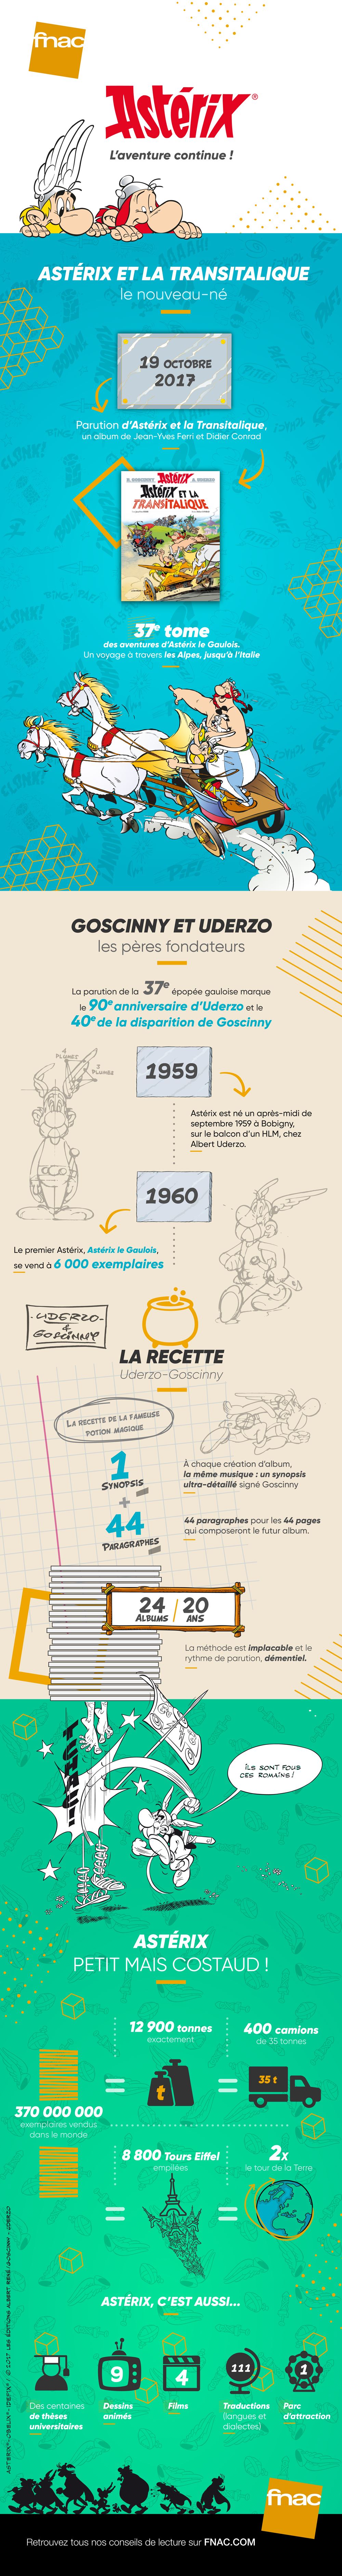 VP-infographie-Asterix